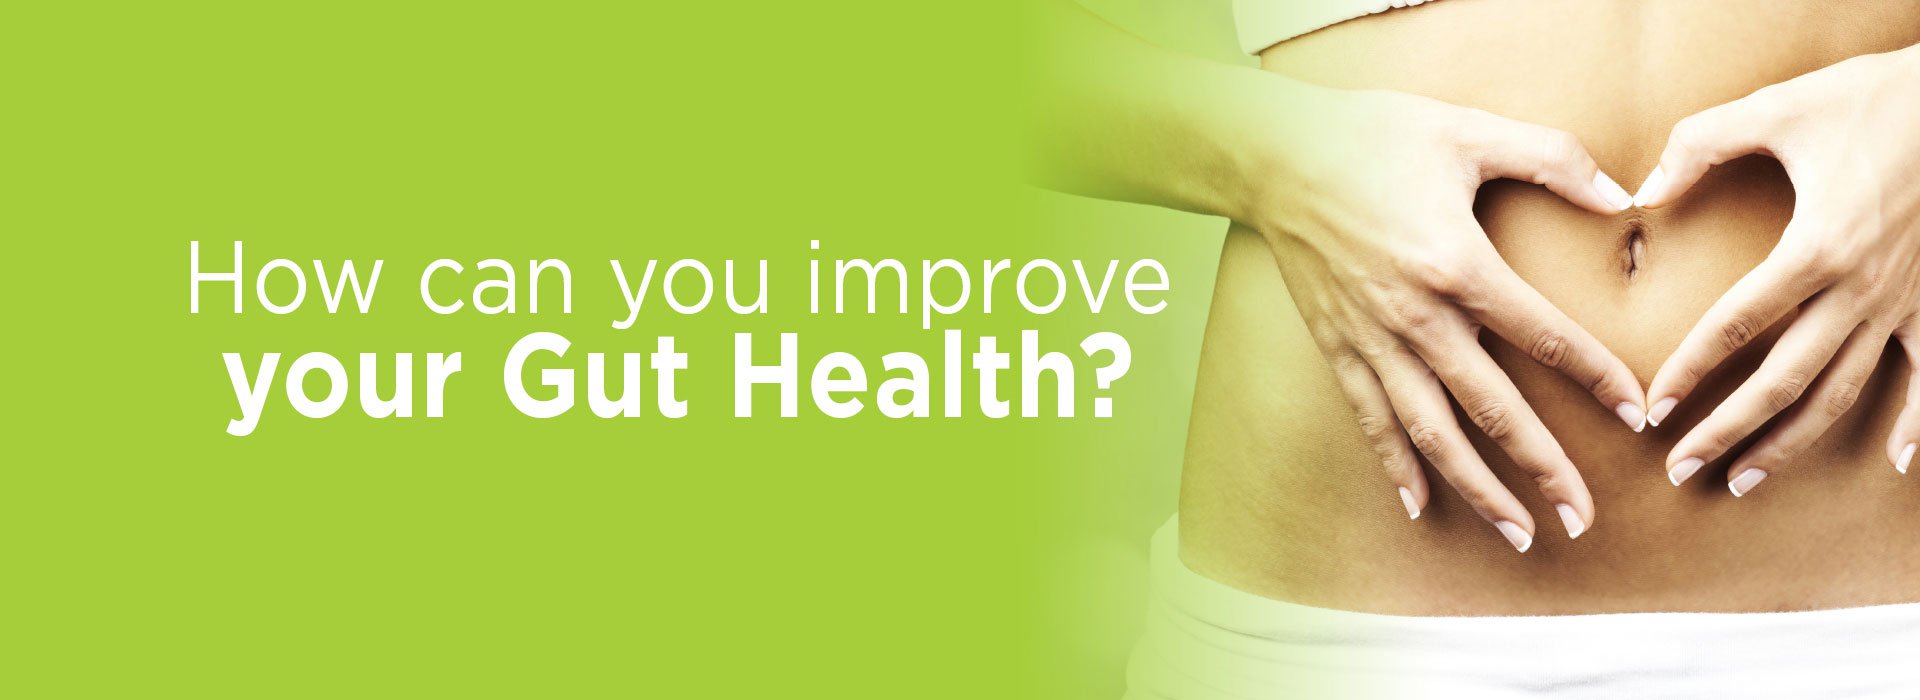 New Image International:Improve Your Gut Health